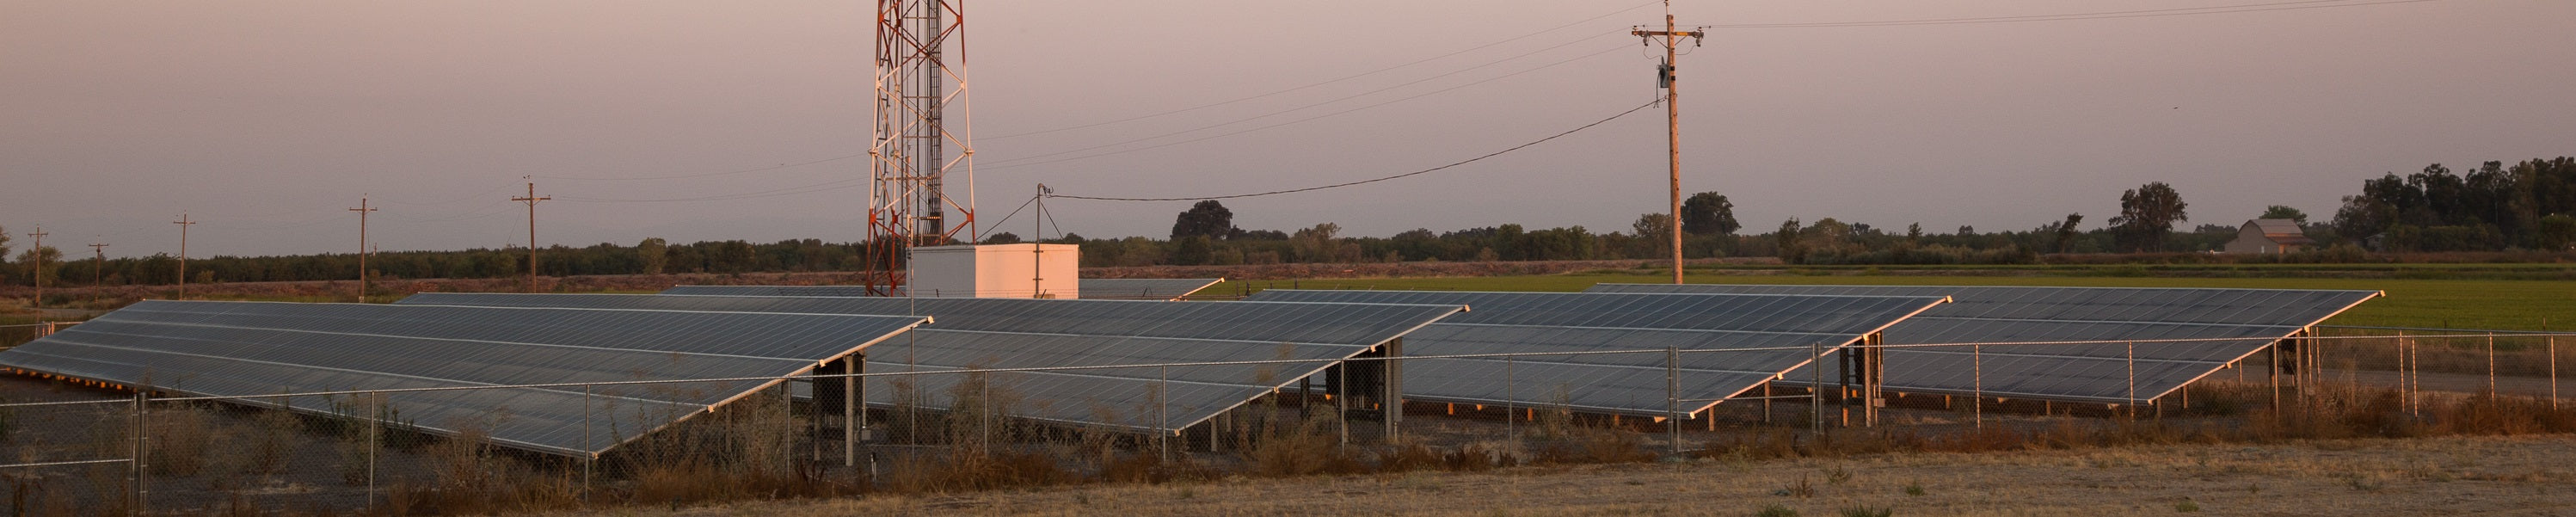 Sohnrey Family Farm Solar Power Systems